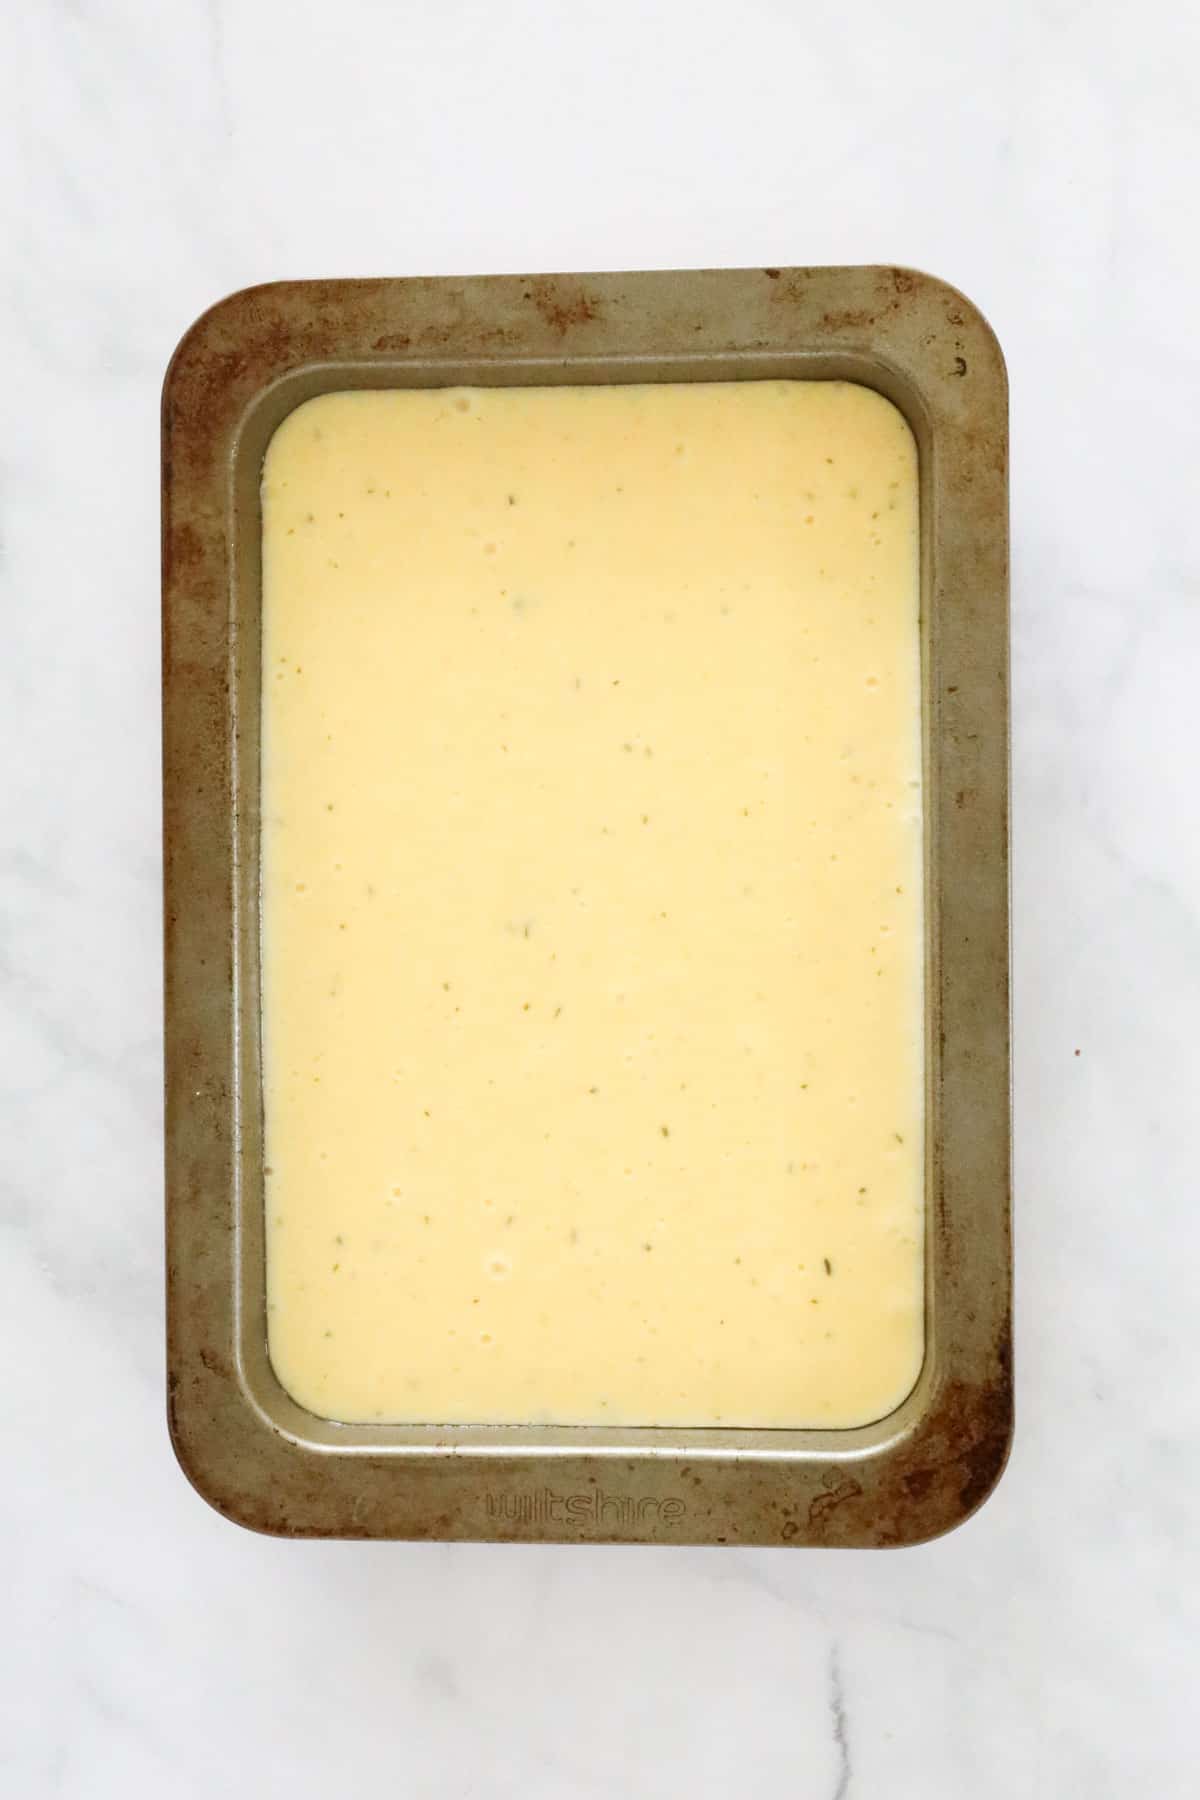 Polenta in a baking tray.